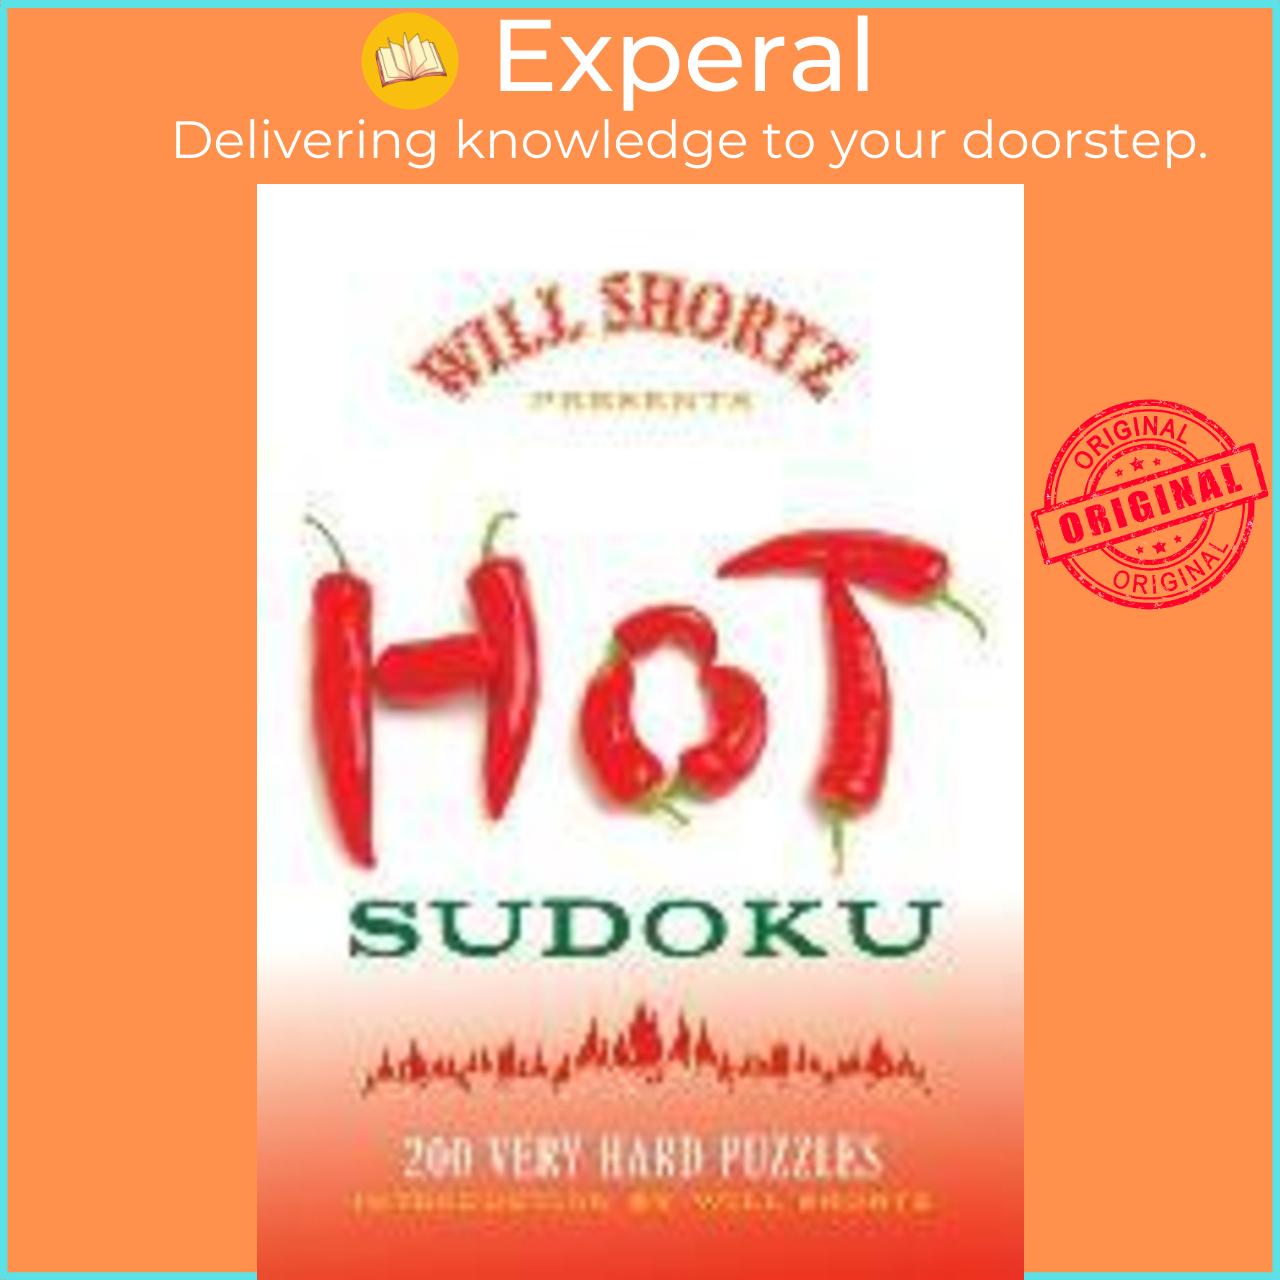 Sách - Hot Sudoku by Will Shortz (US edition, paperback)